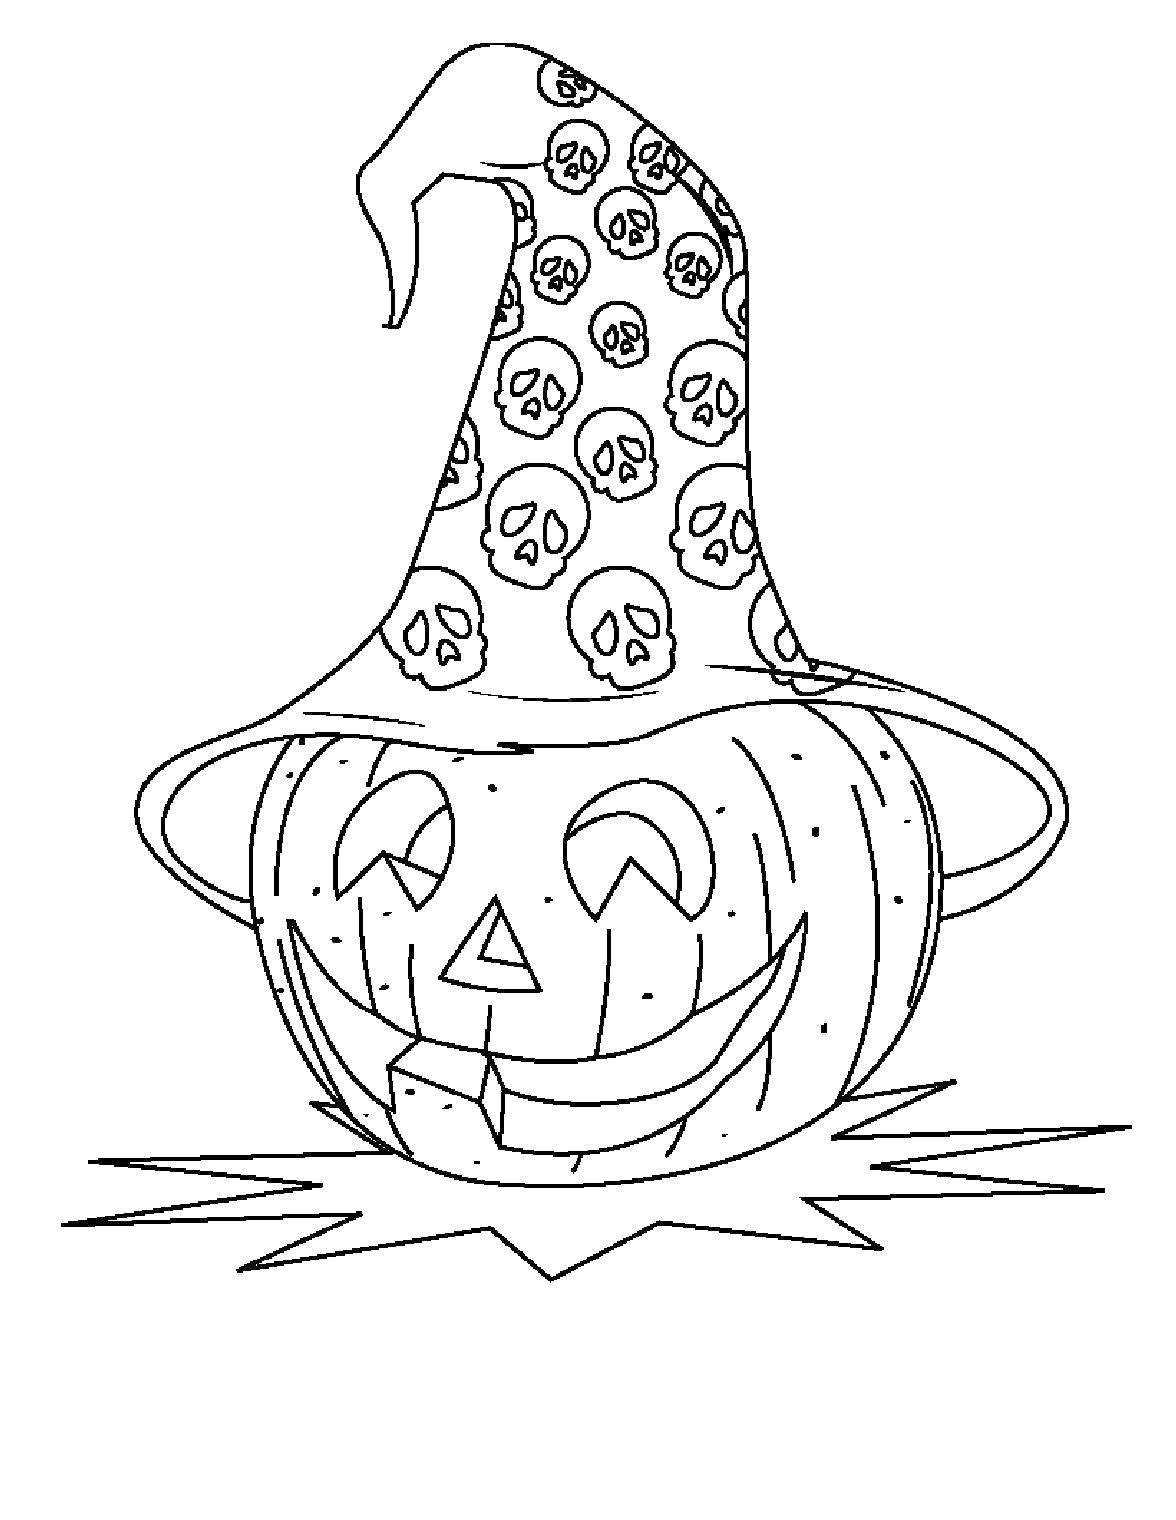 Название: Раскраска Тыква в шляпе ведьмы. Категория: тыква на хэллоуин. Теги: Хэллоуин, тыква.